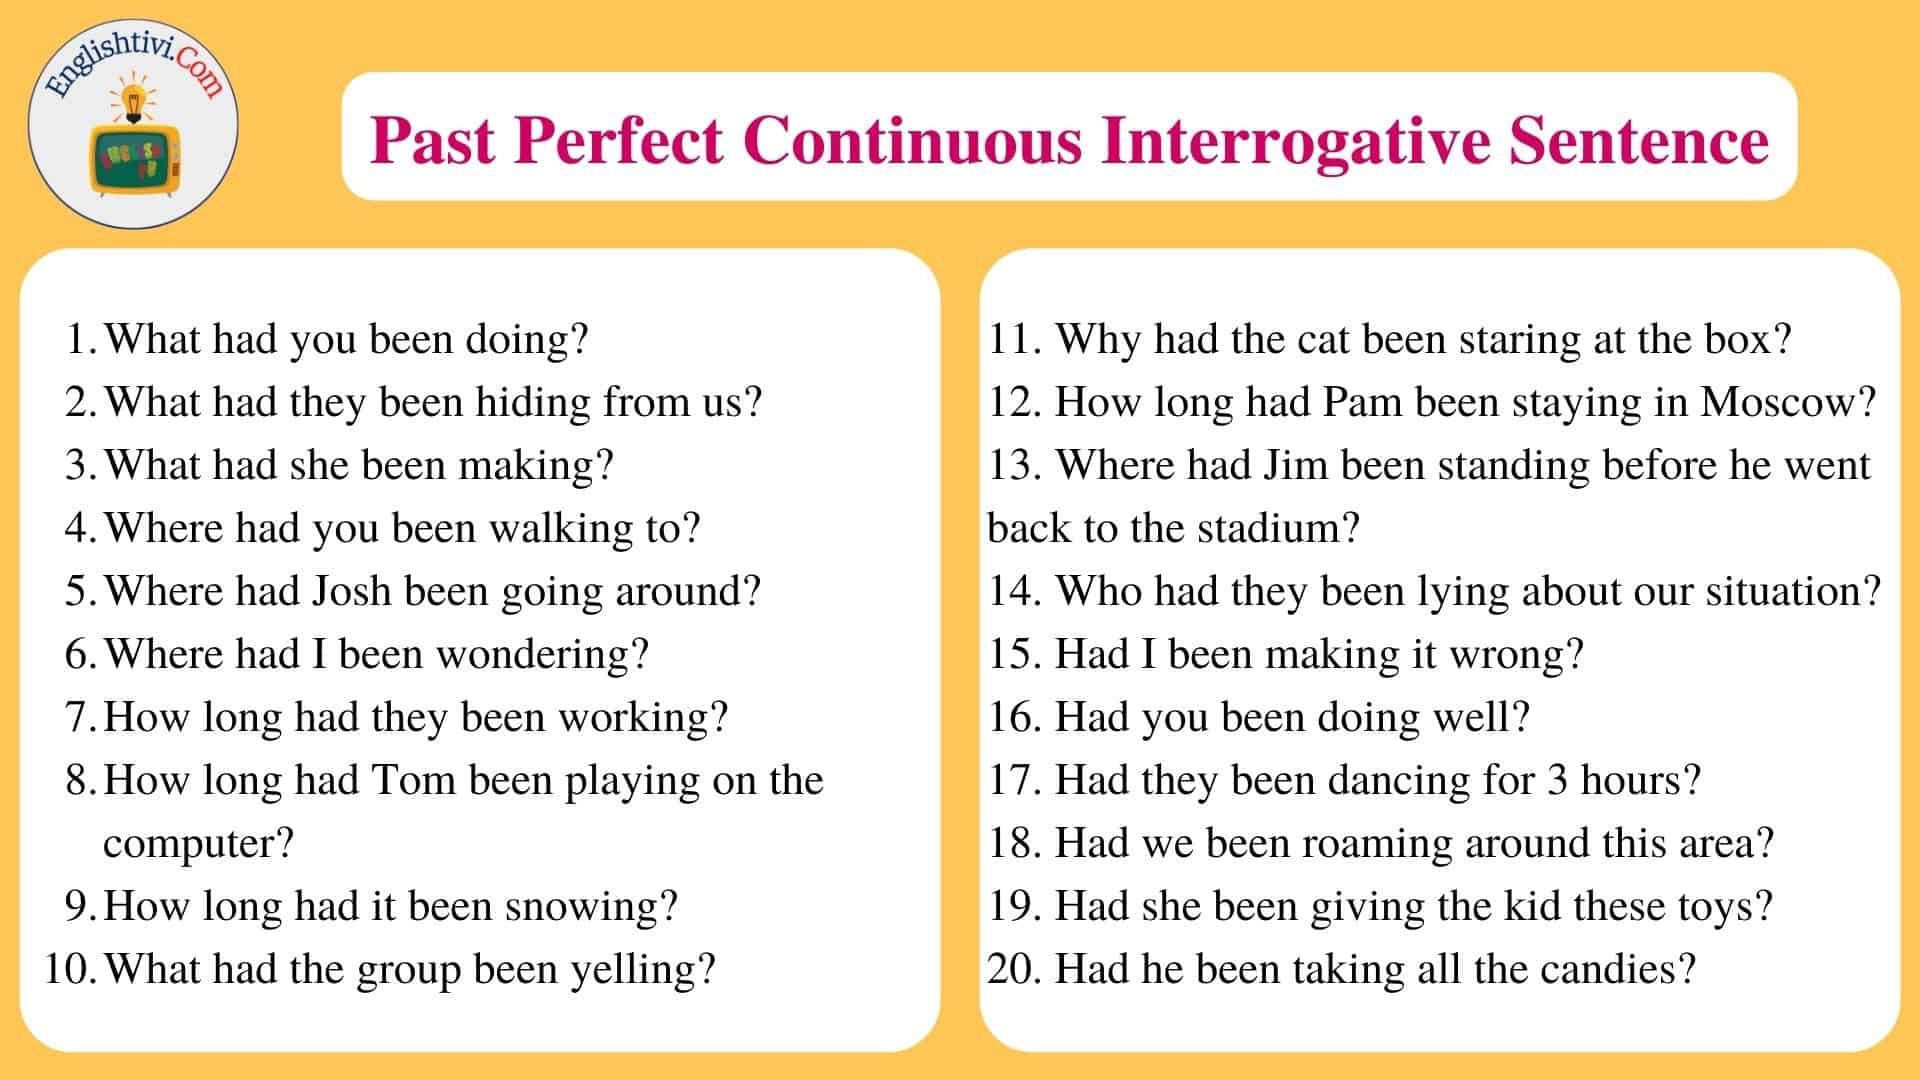 Past Perfect Continuous Interrogative Sentence